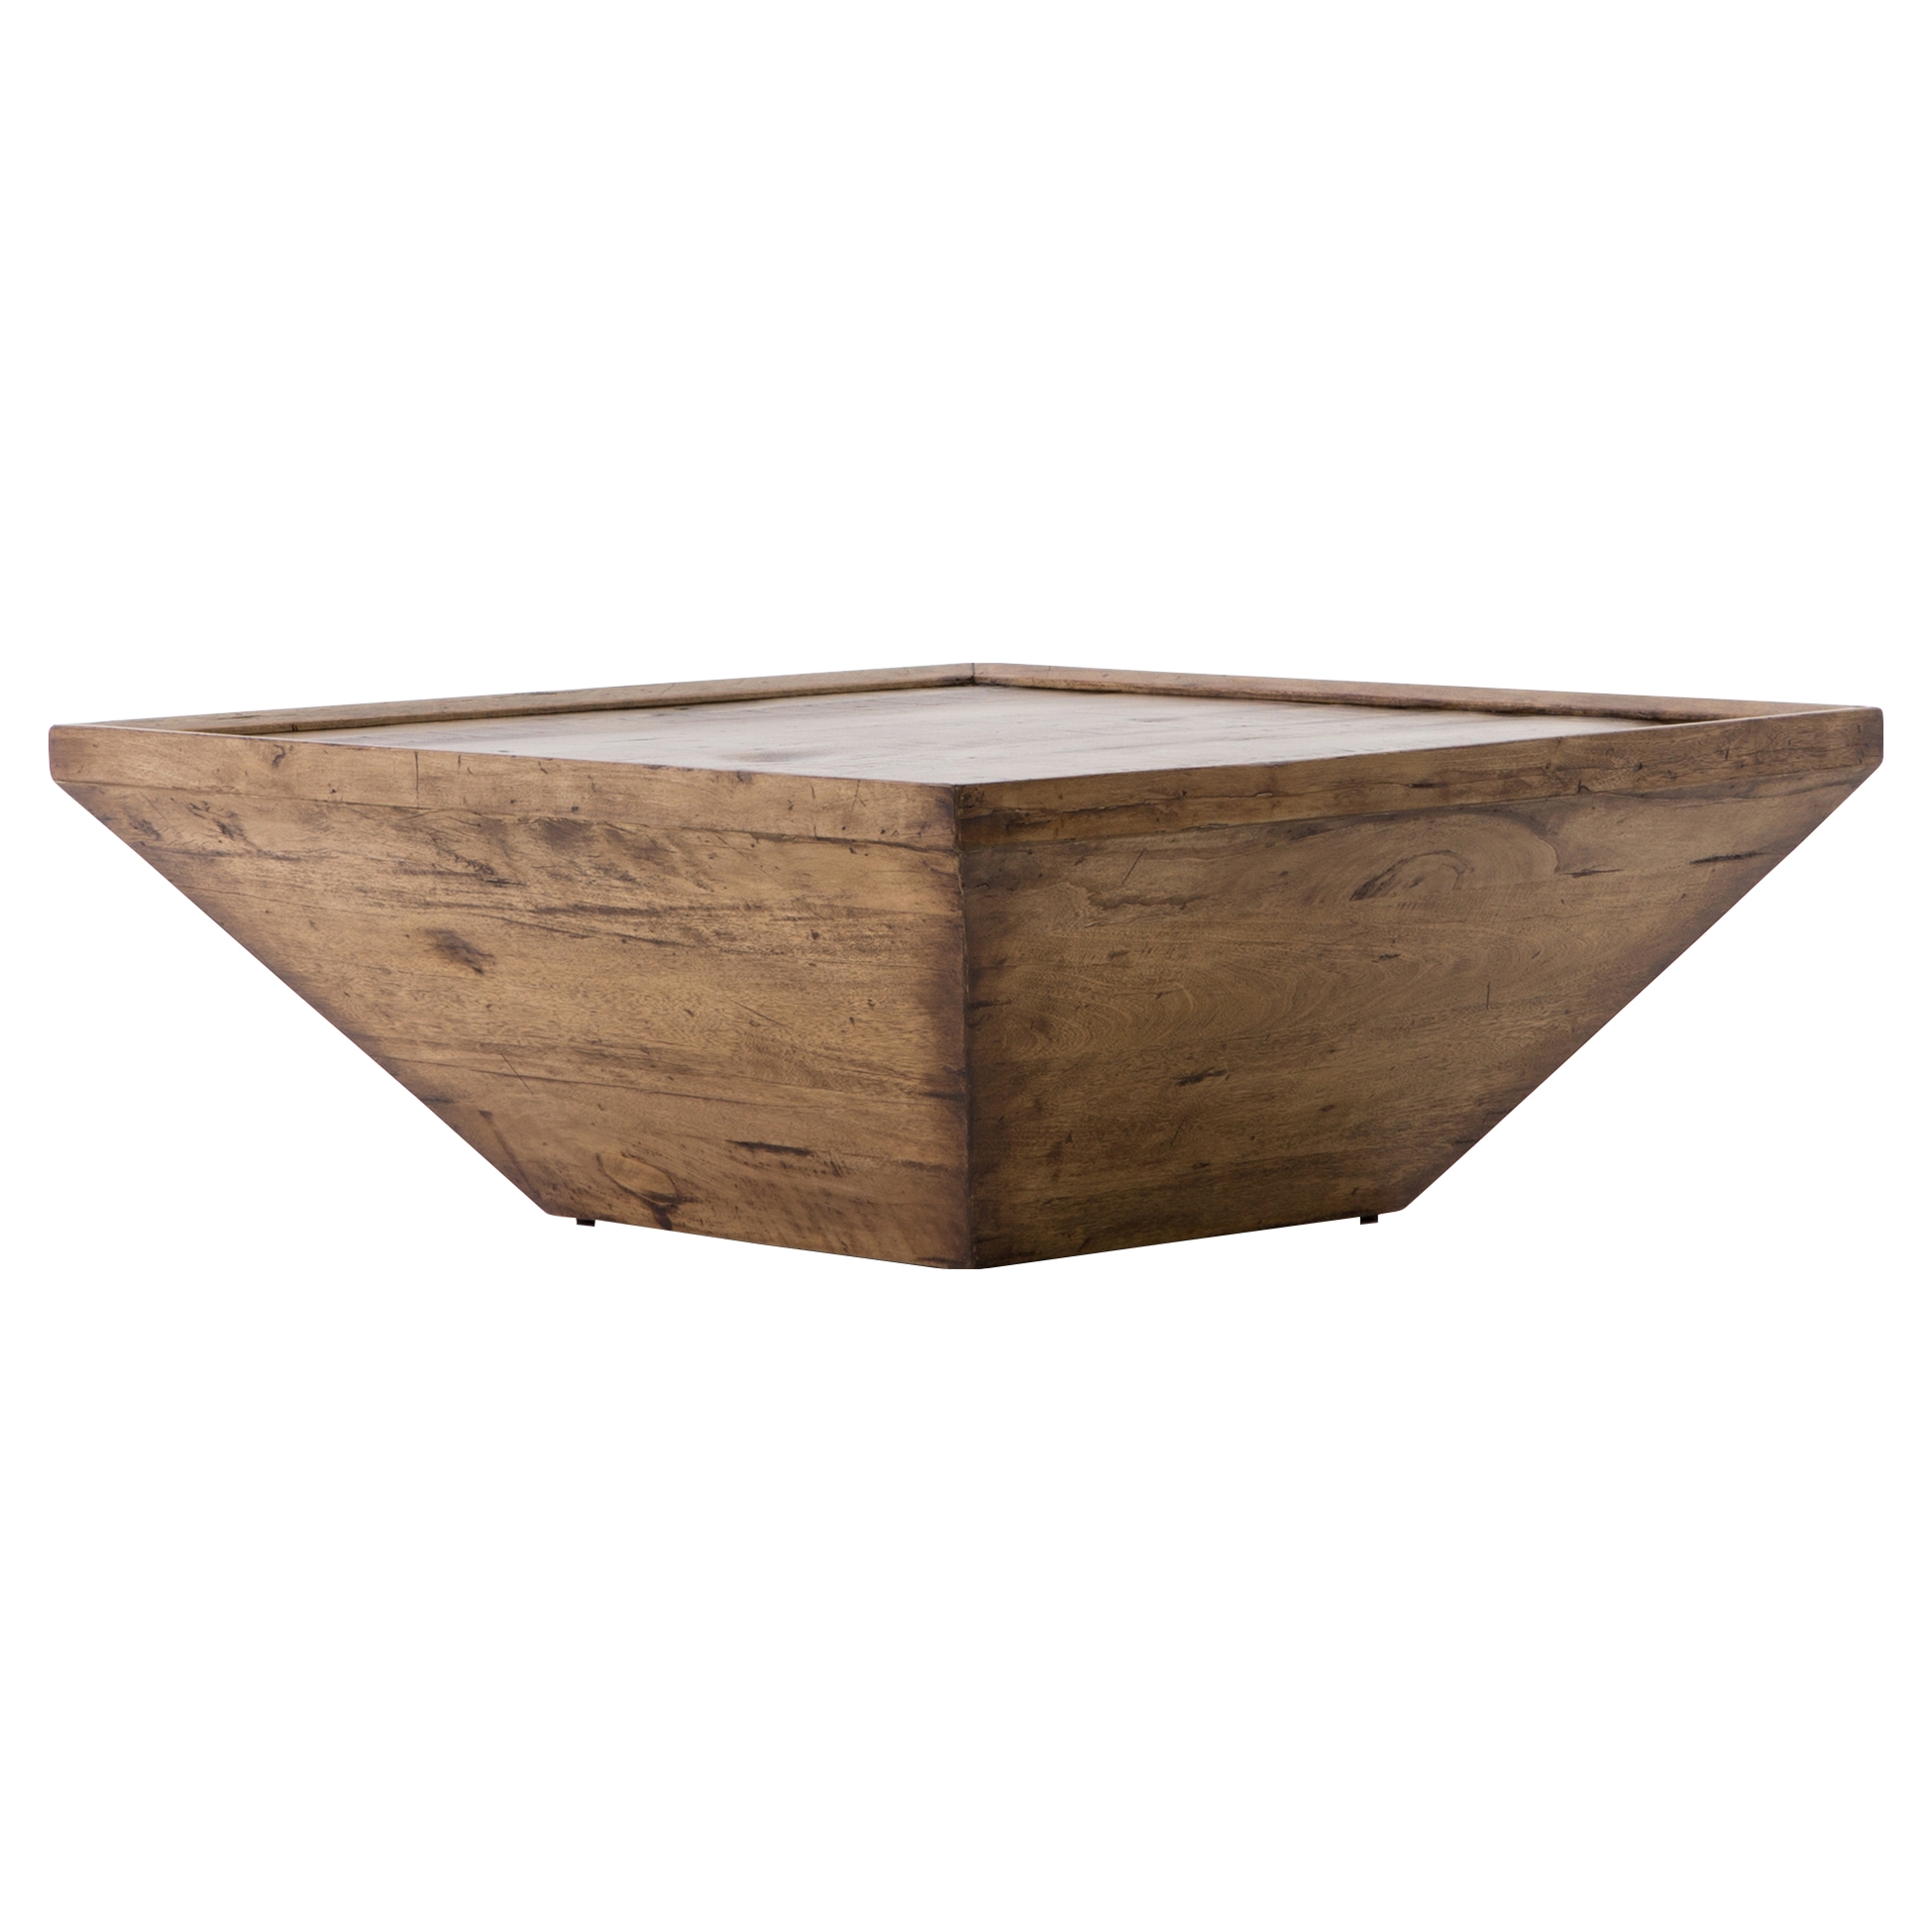 Eckard Rustic Lodge Geometric Reclaimed Wood Coffee Table - Image 1